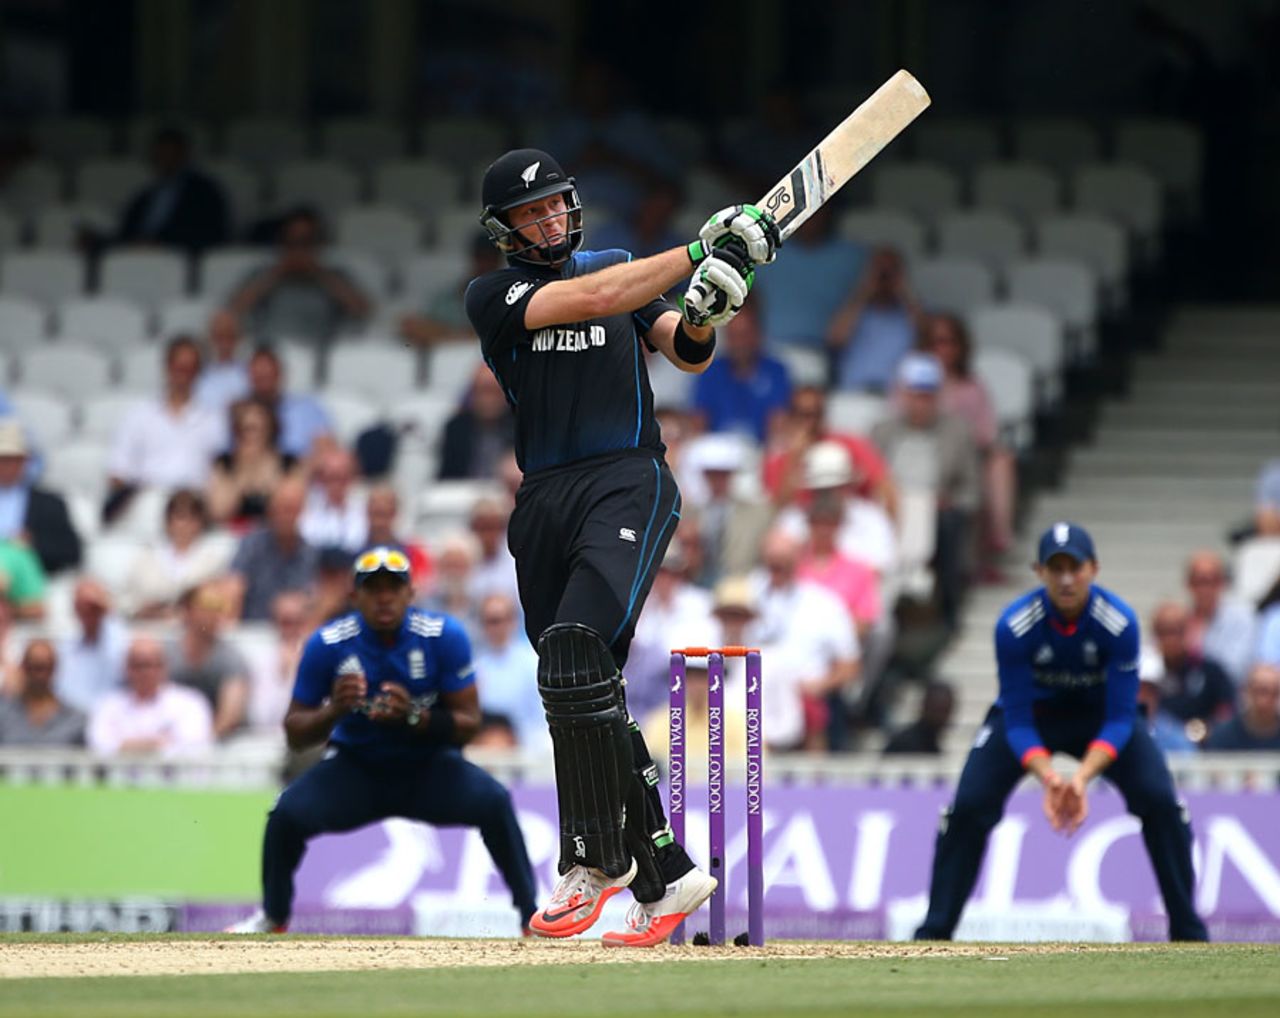 Martin Guptill struck 50 off 54 balls, England v New Zealand, 2nd ODI, Kia Oval, June 12, 2015